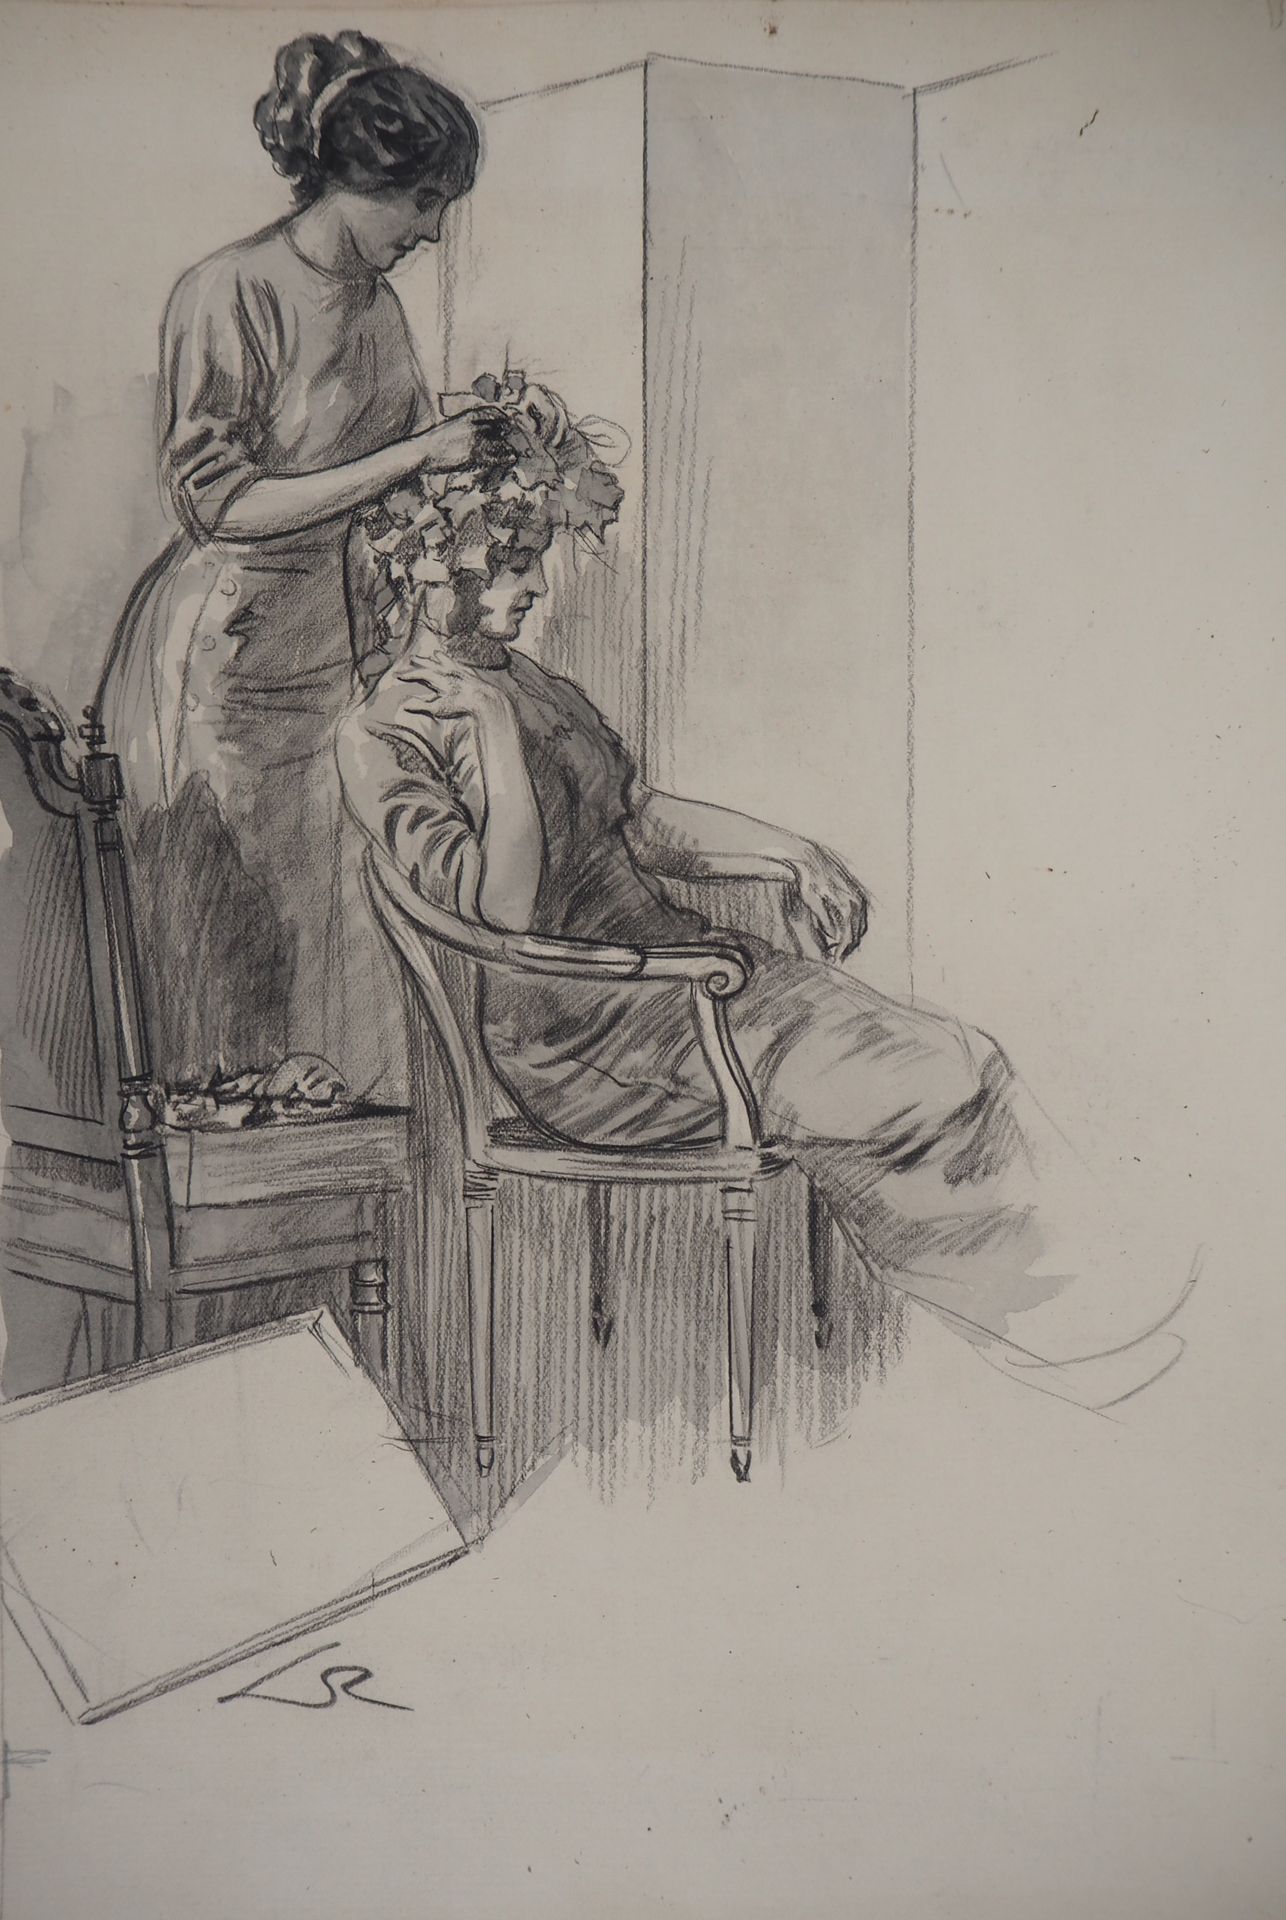 Almery LOBEL-RICHE Alméry LOBEL-RICHE (1880-1950)

在理发店，约1920年

铅笔线和树桩上的印度墨水原画

&hellip;